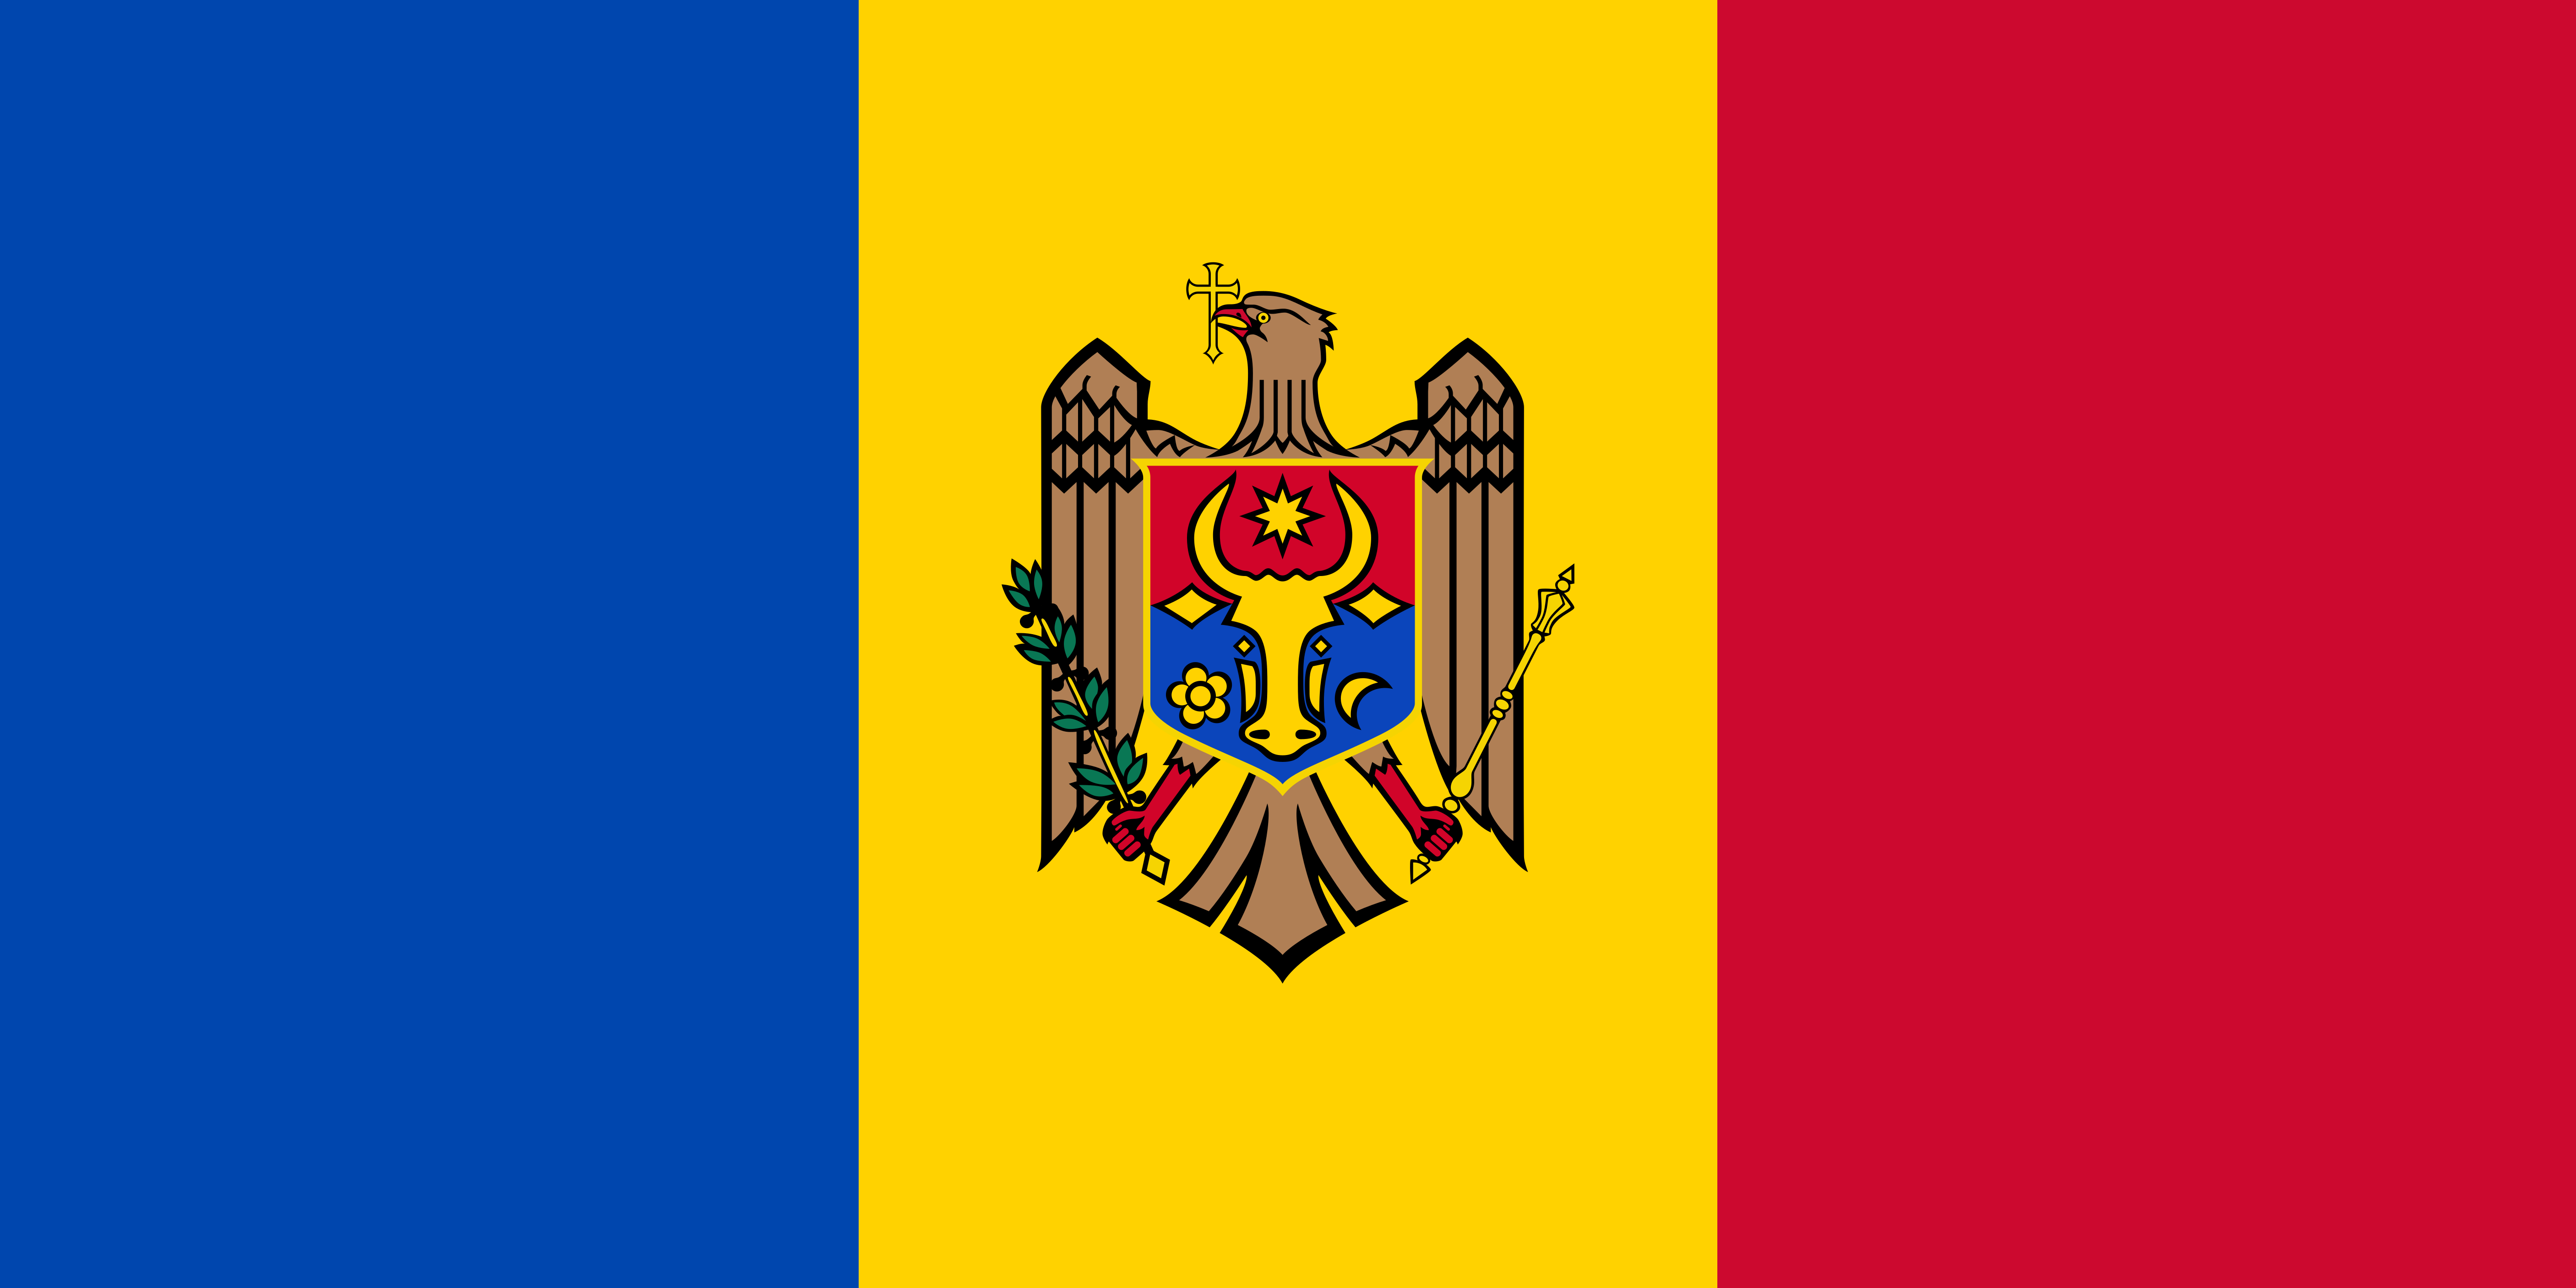 Free Moldova Flag Documents: PDF, DOC, DOCX, HTML & More!